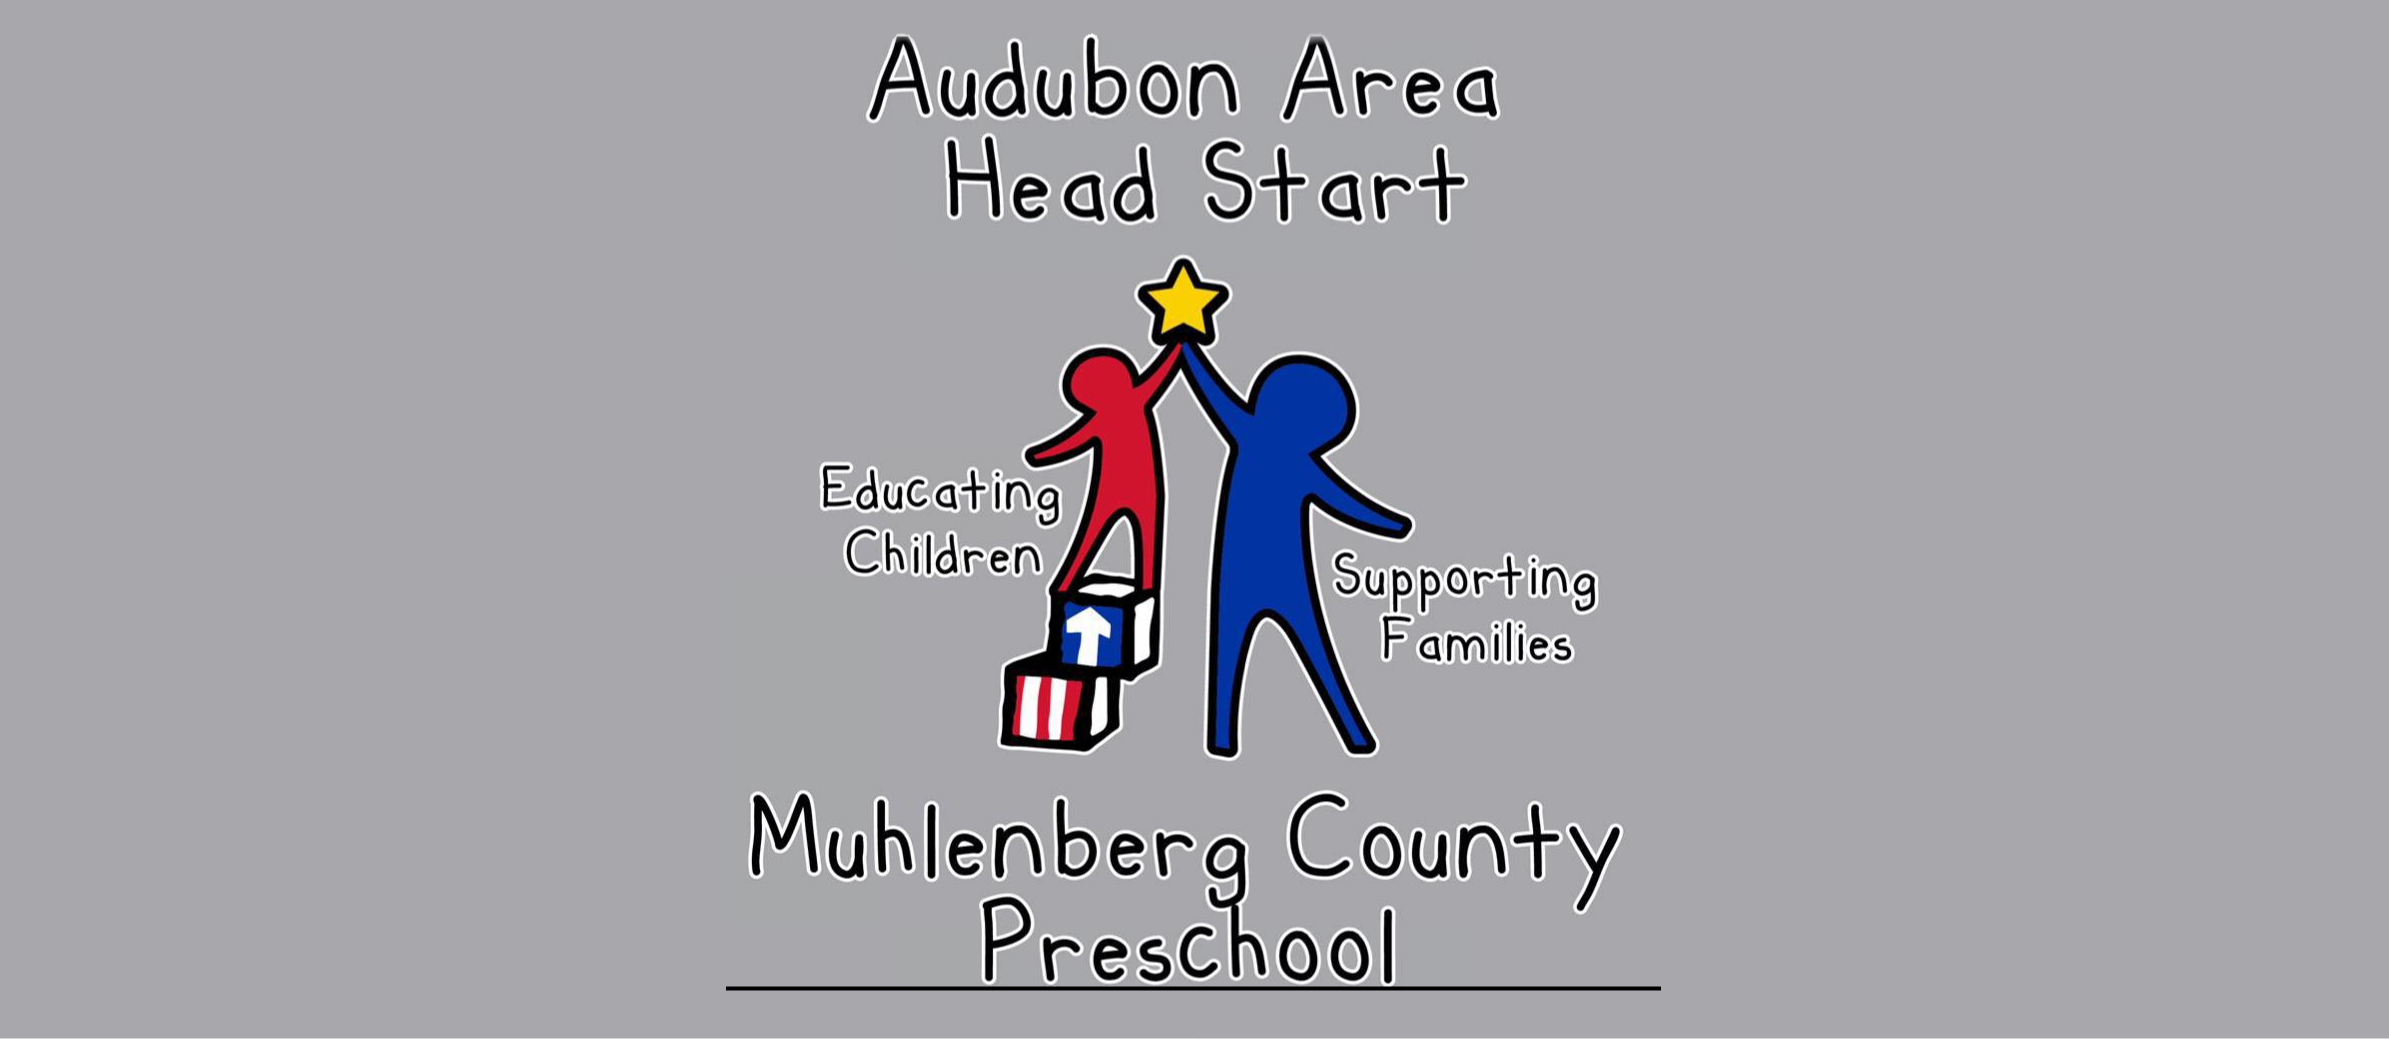 muhlenberg preschool audubon area head start logo